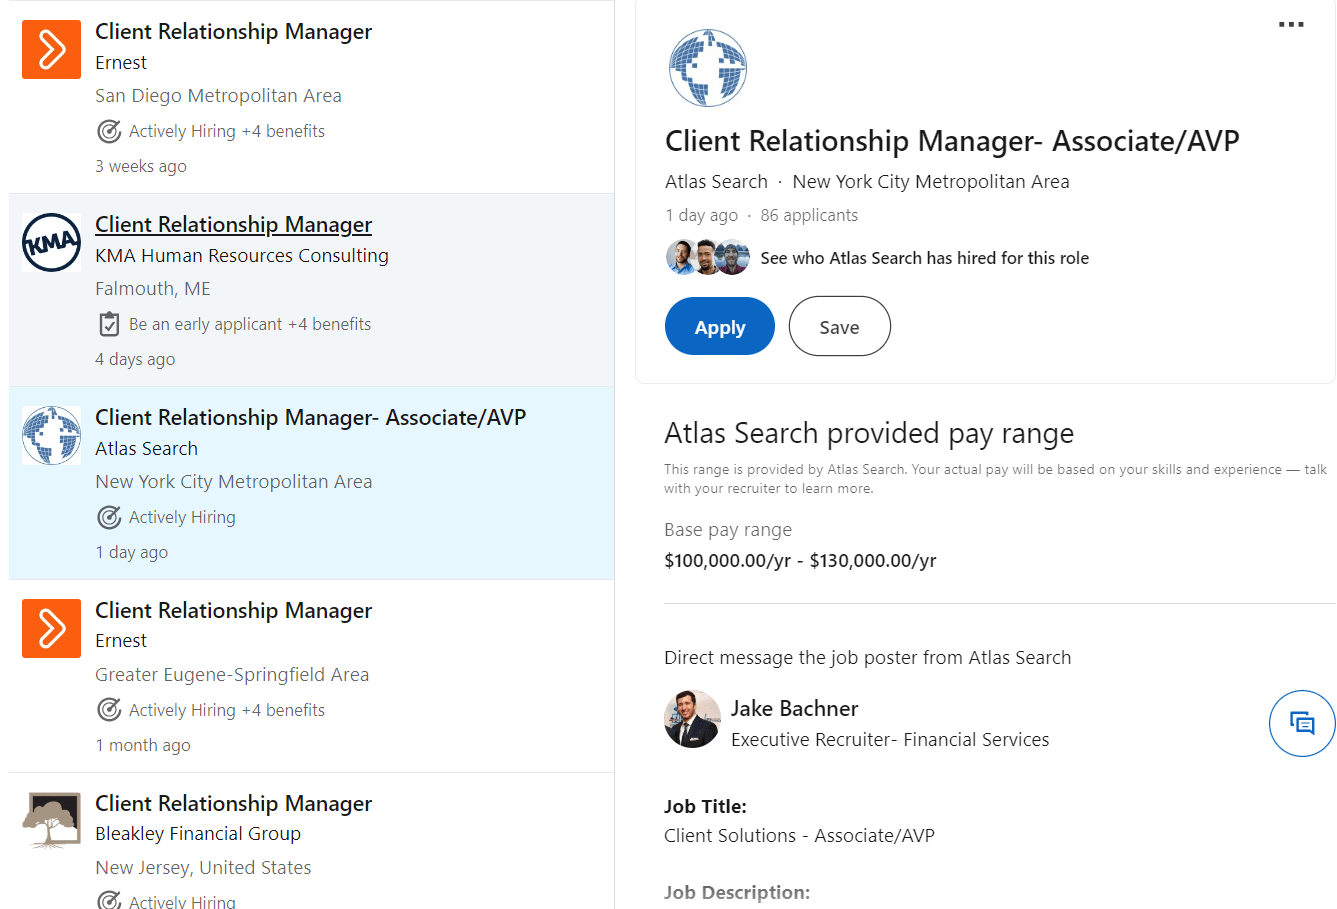 CRM Manager job postings on LinkedIn